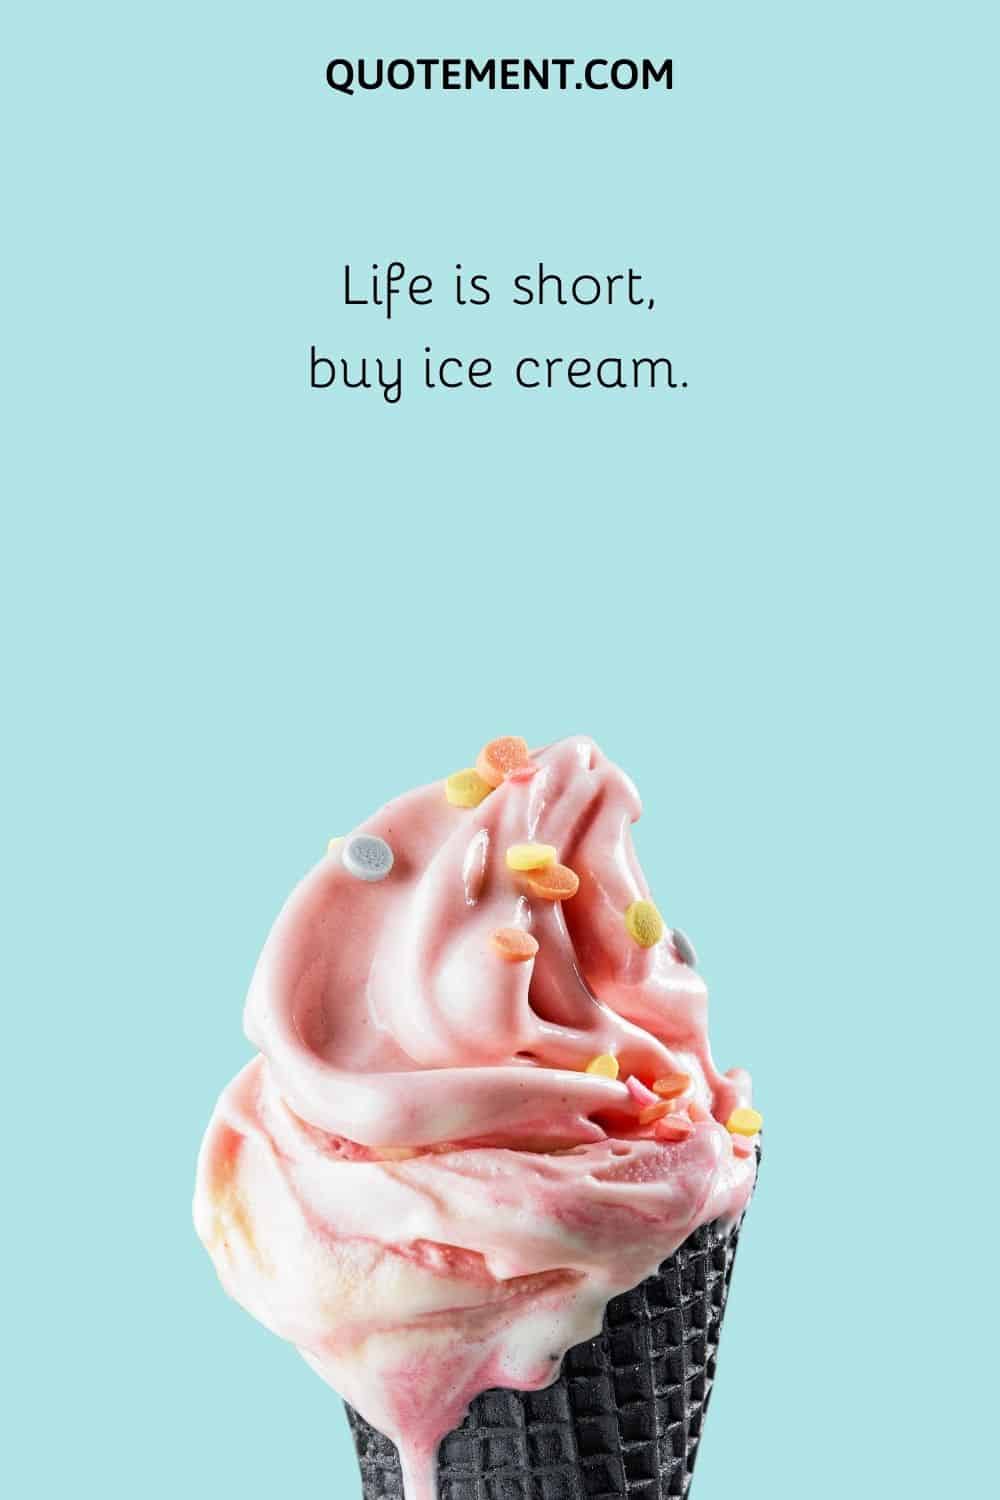 Life is short, buy ice cream